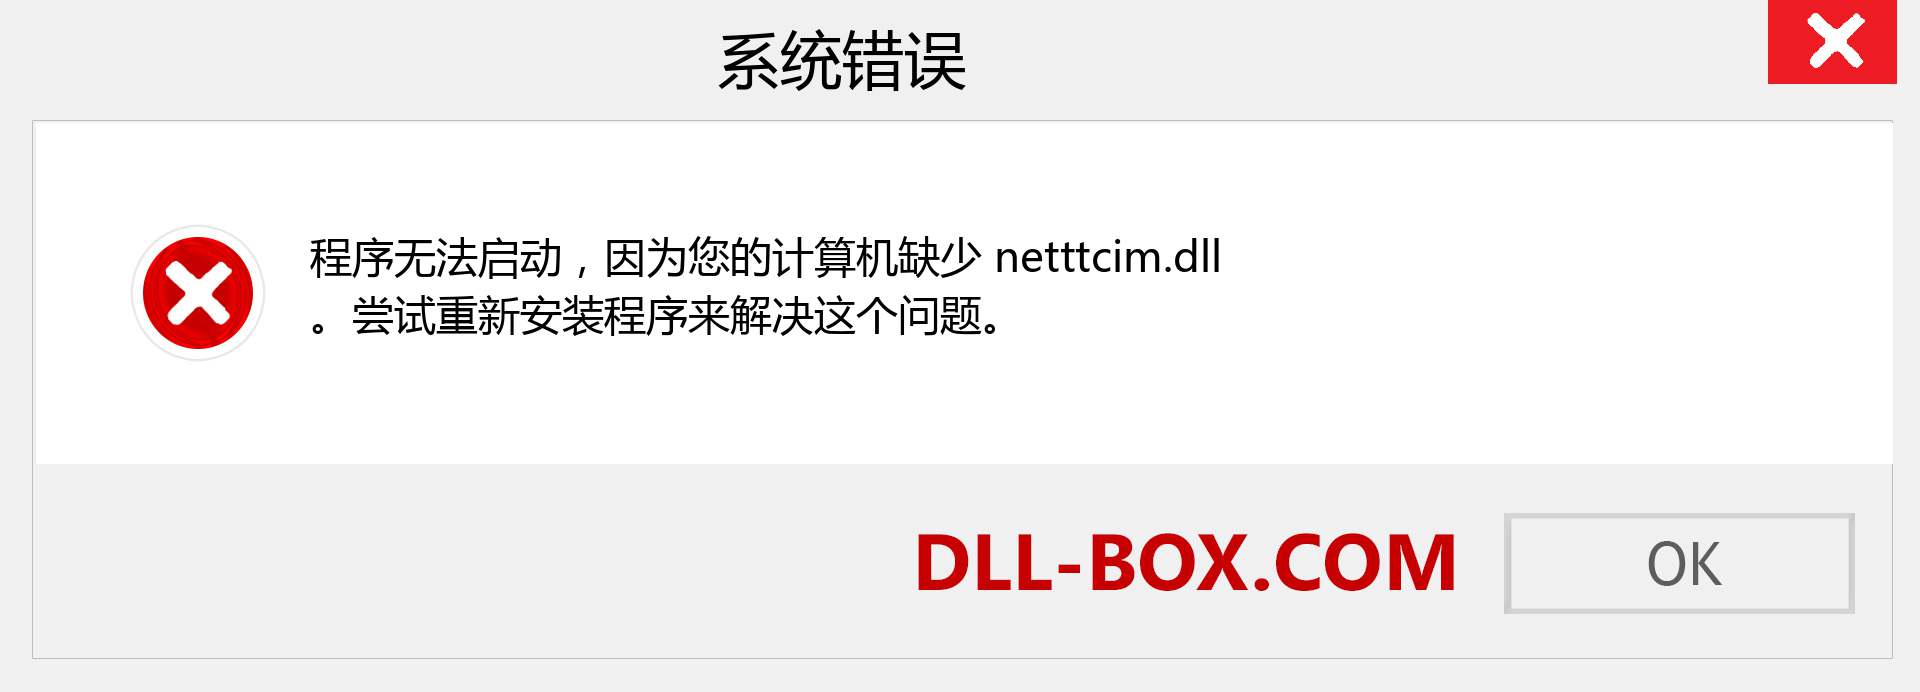 netttcim.dll 文件丢失？。 适用于 Windows 7、8、10 的下载 - 修复 Windows、照片、图像上的 netttcim dll 丢失错误